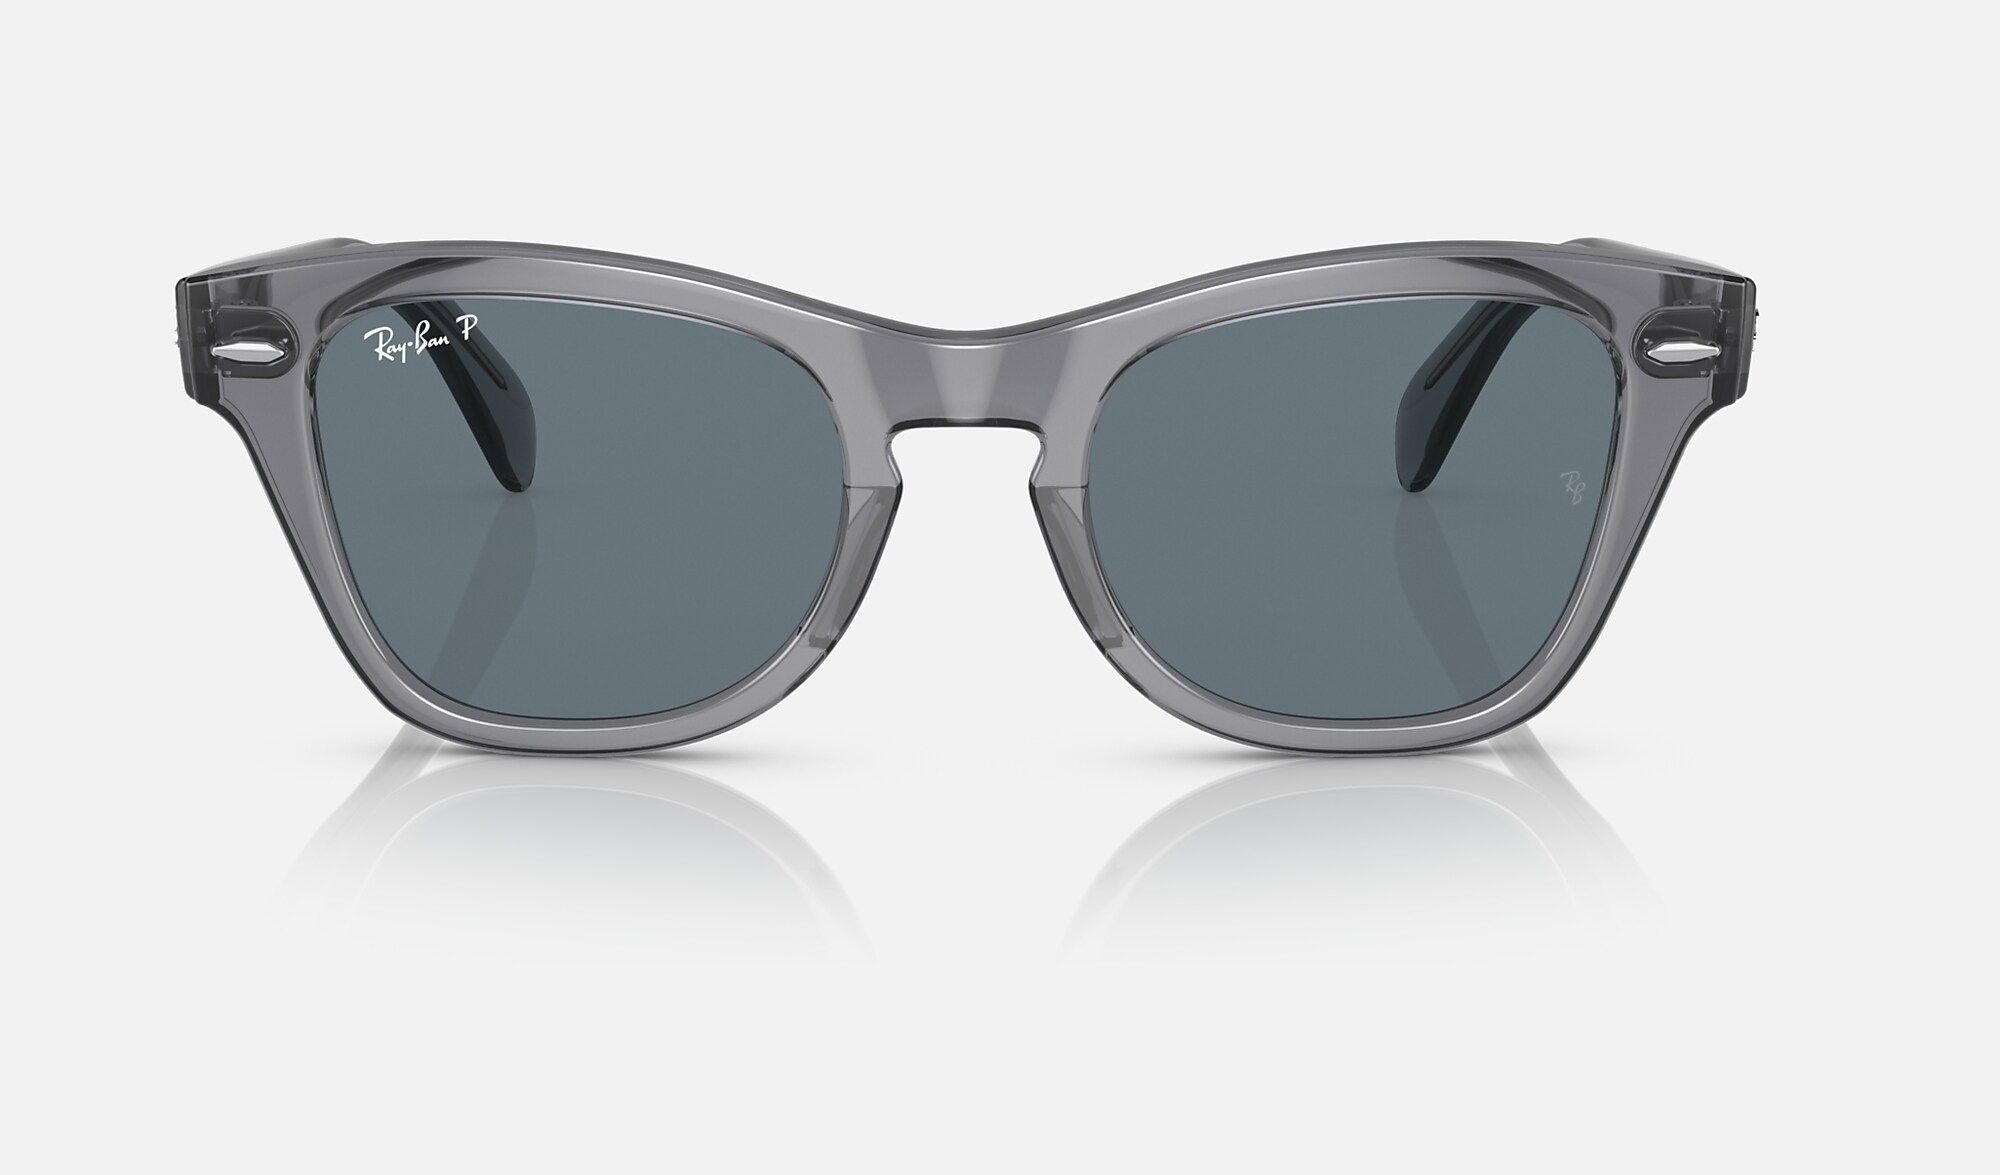  Ray Ban RB0707s 6641/3R polarized sunglasses 